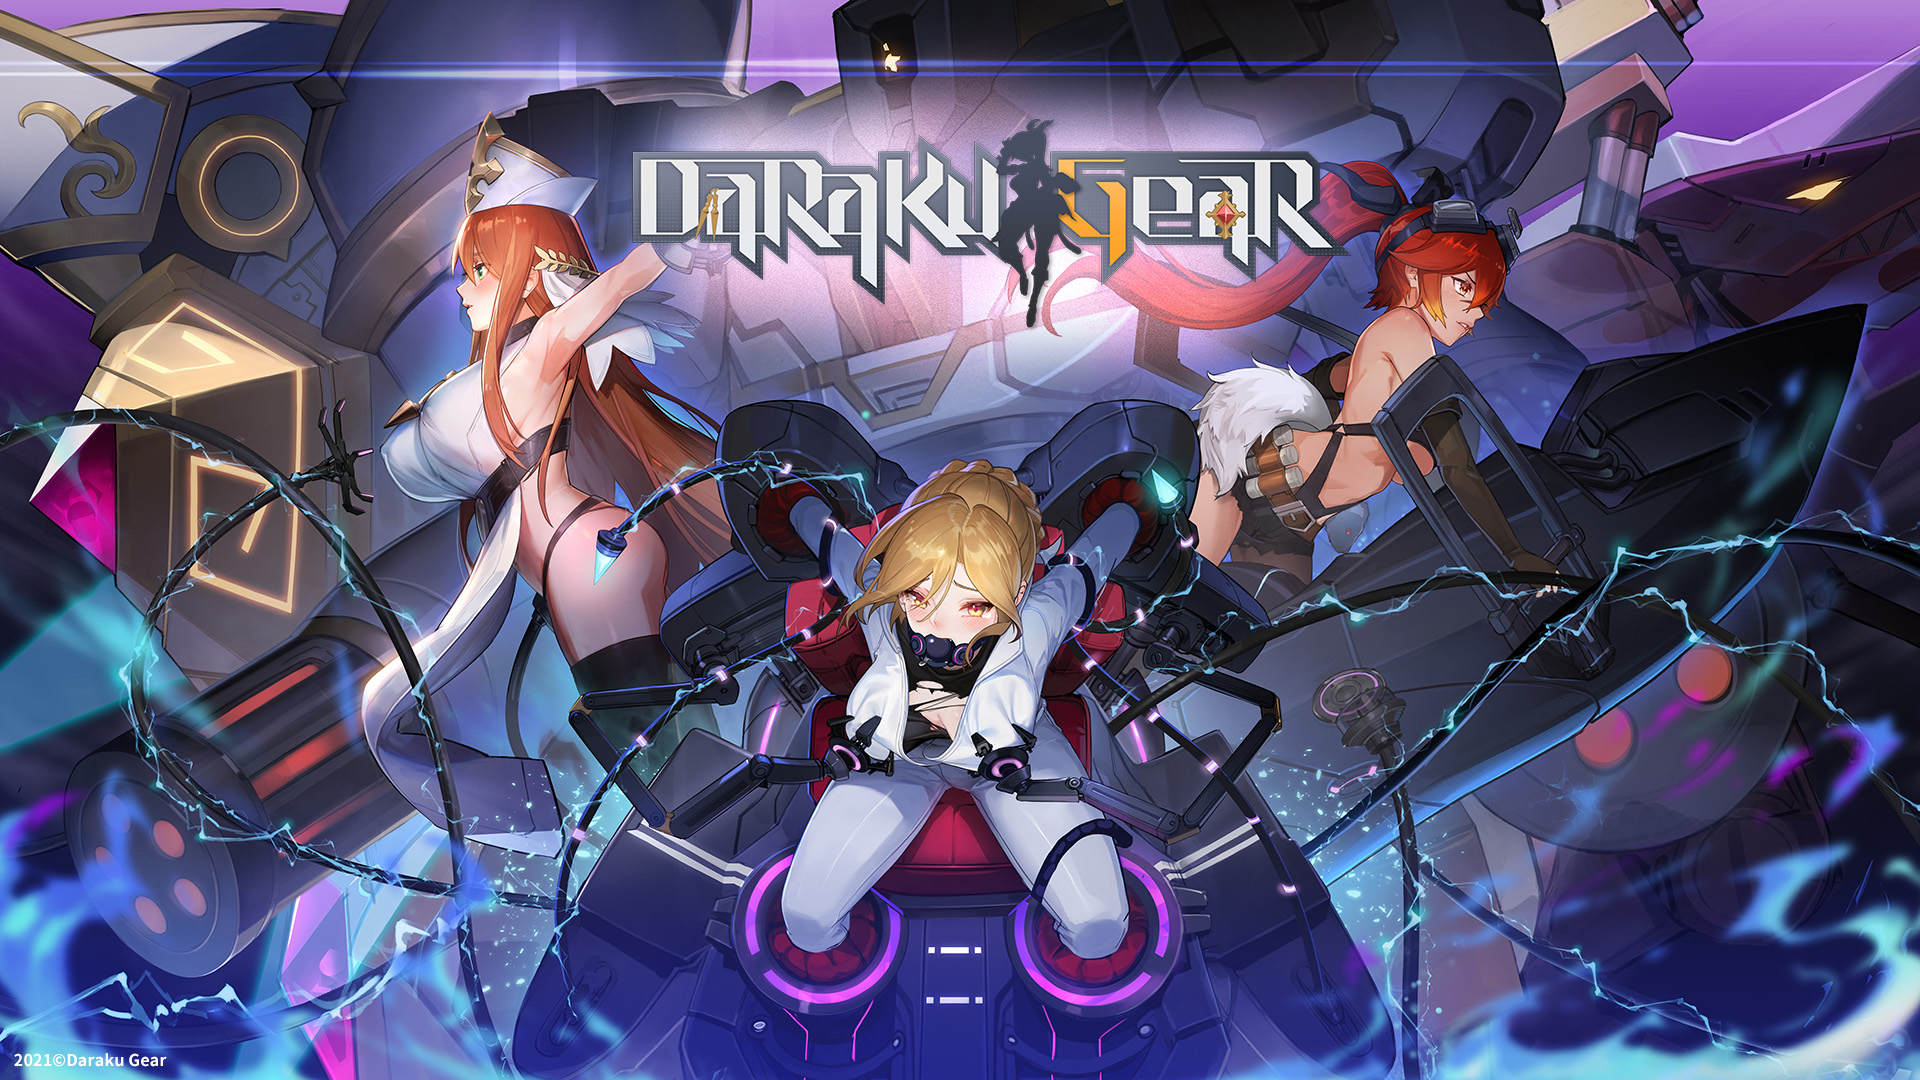 Forced Sex Porn Games - Daraku Gear - RPG Sex Game with APK file | Nutaku